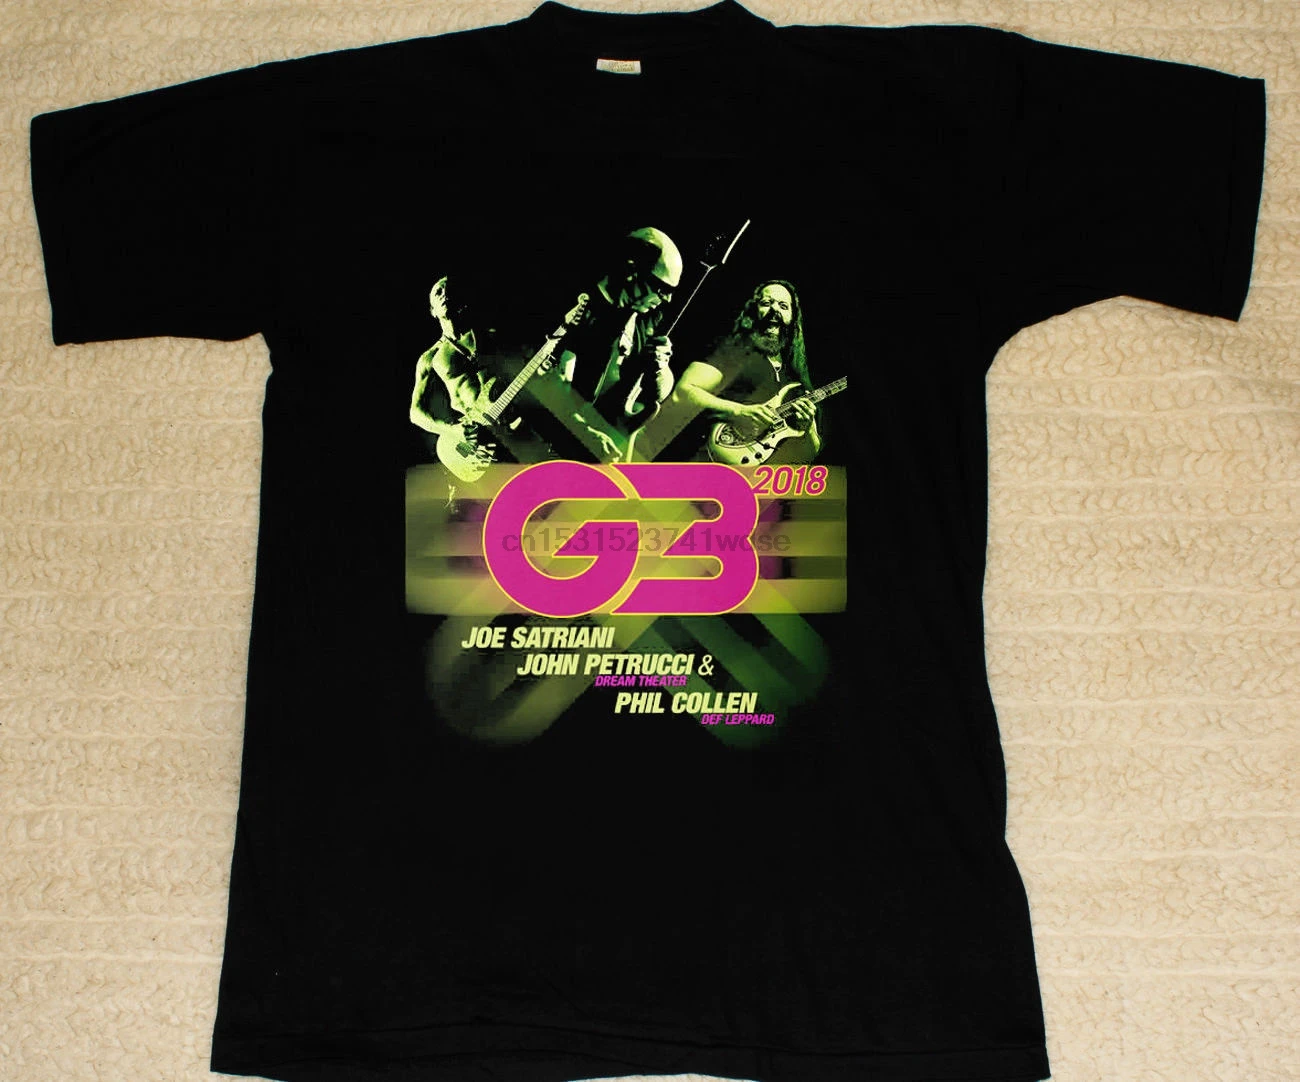 G3 Joe Satriani John Petrucci Phil Collen Tour Dates 2020 on Black T-Shirt S-3XL Short Sleeve Cotton T Shirts Man Clothing |